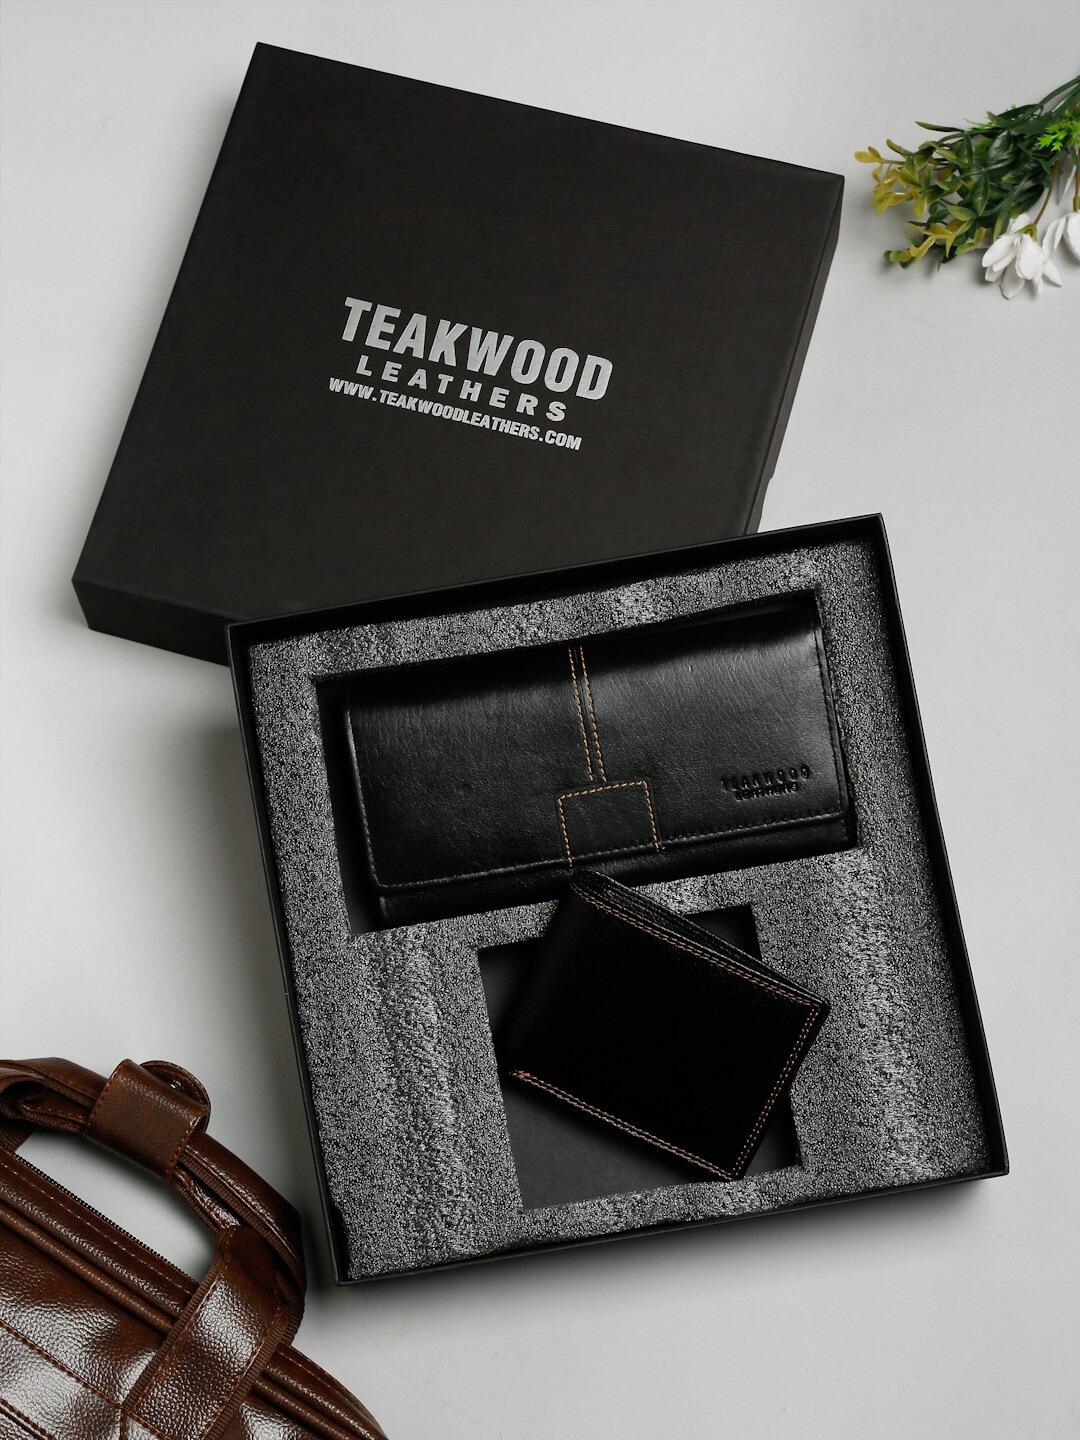 teakwood leathers black leather accessory gift set